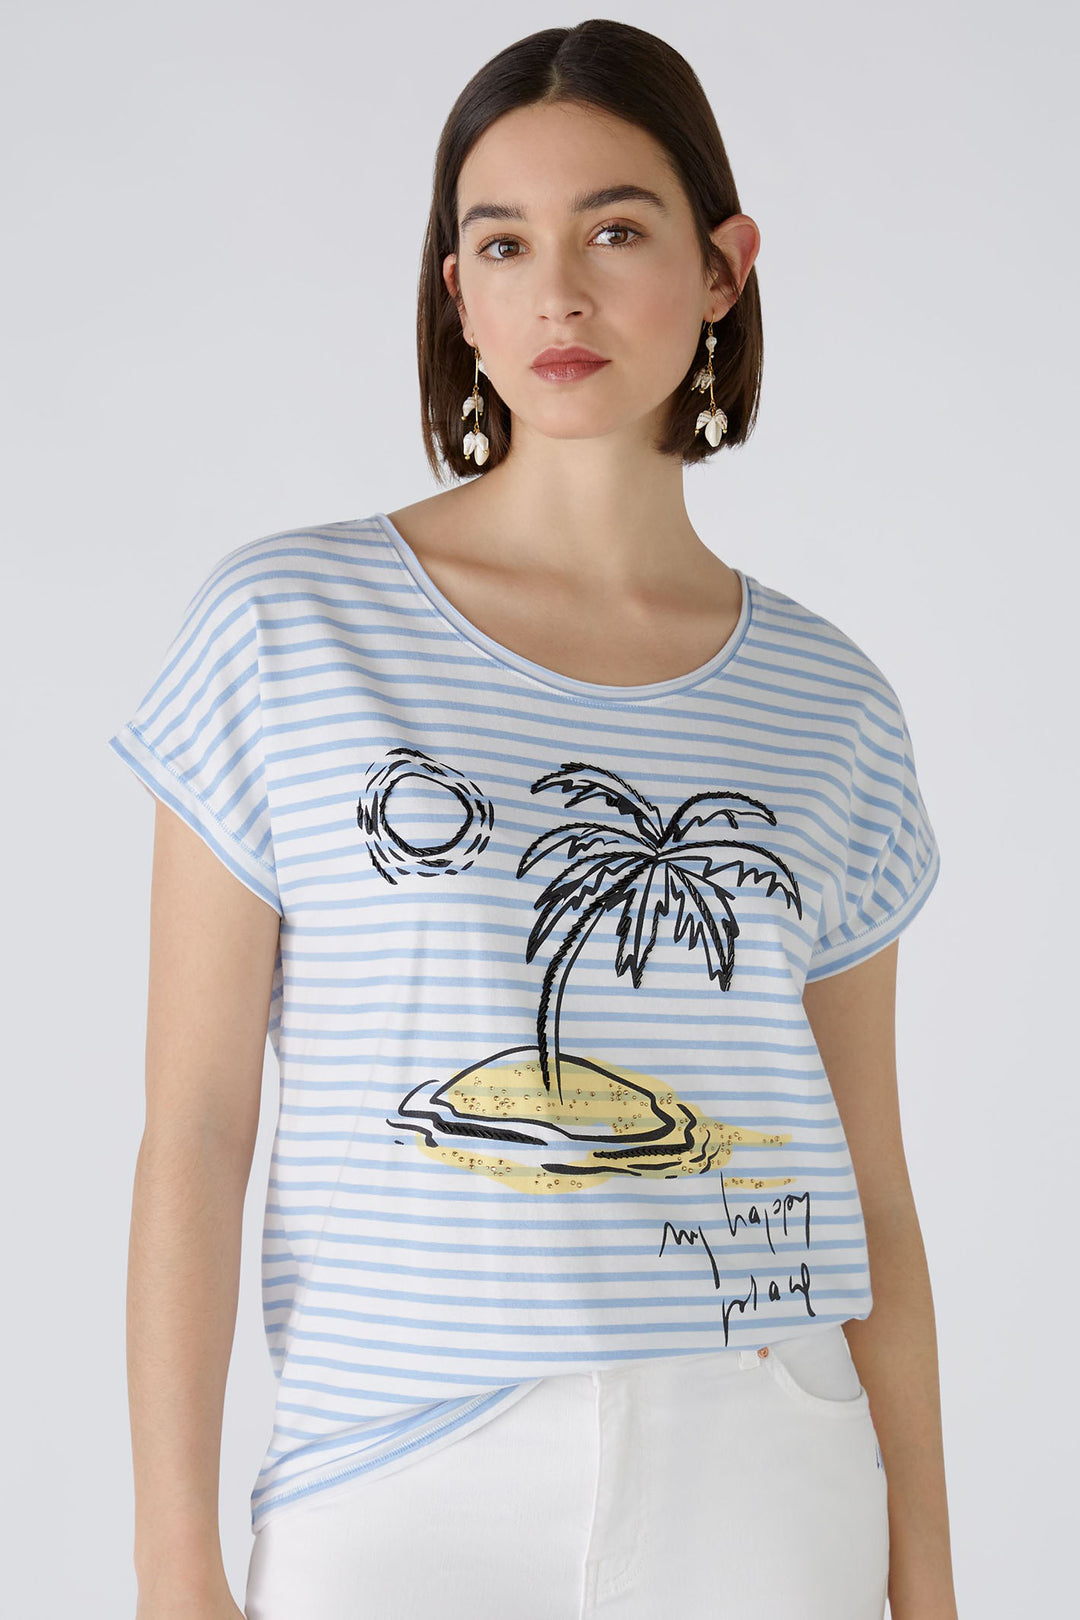 Oui 87383 Offwhite Blue Stripe Tropical Island Motif T-Shirt - Olivia Grace Fashion